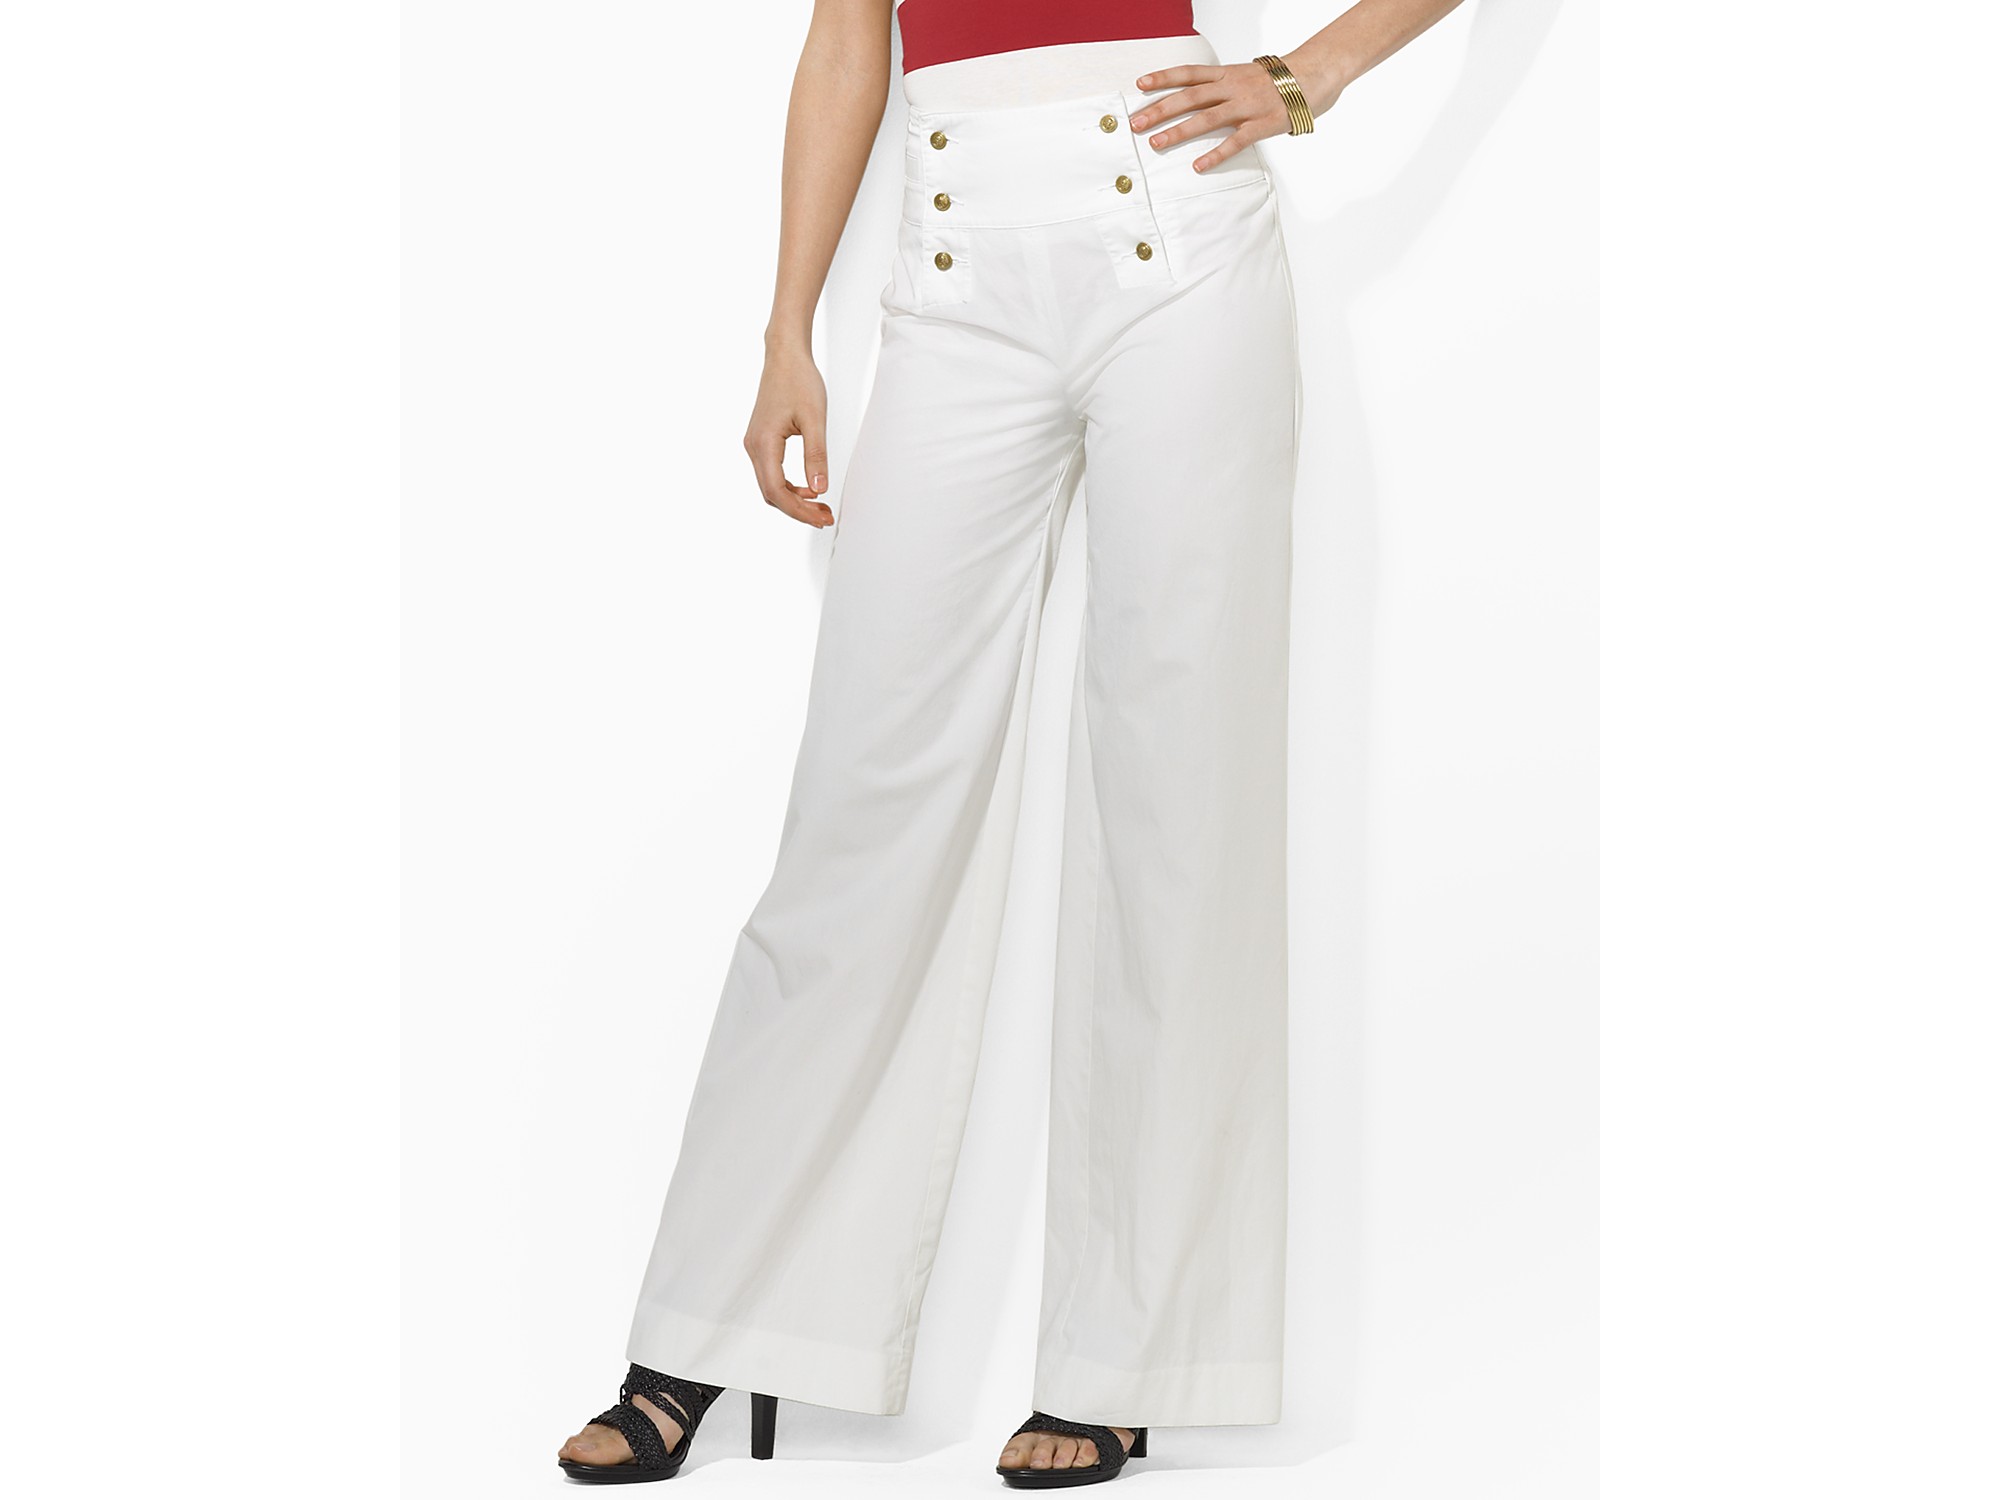 Lyst - Lauren By Ralph Lauren Nicklaus Cotton Twill Sailor Pants in White